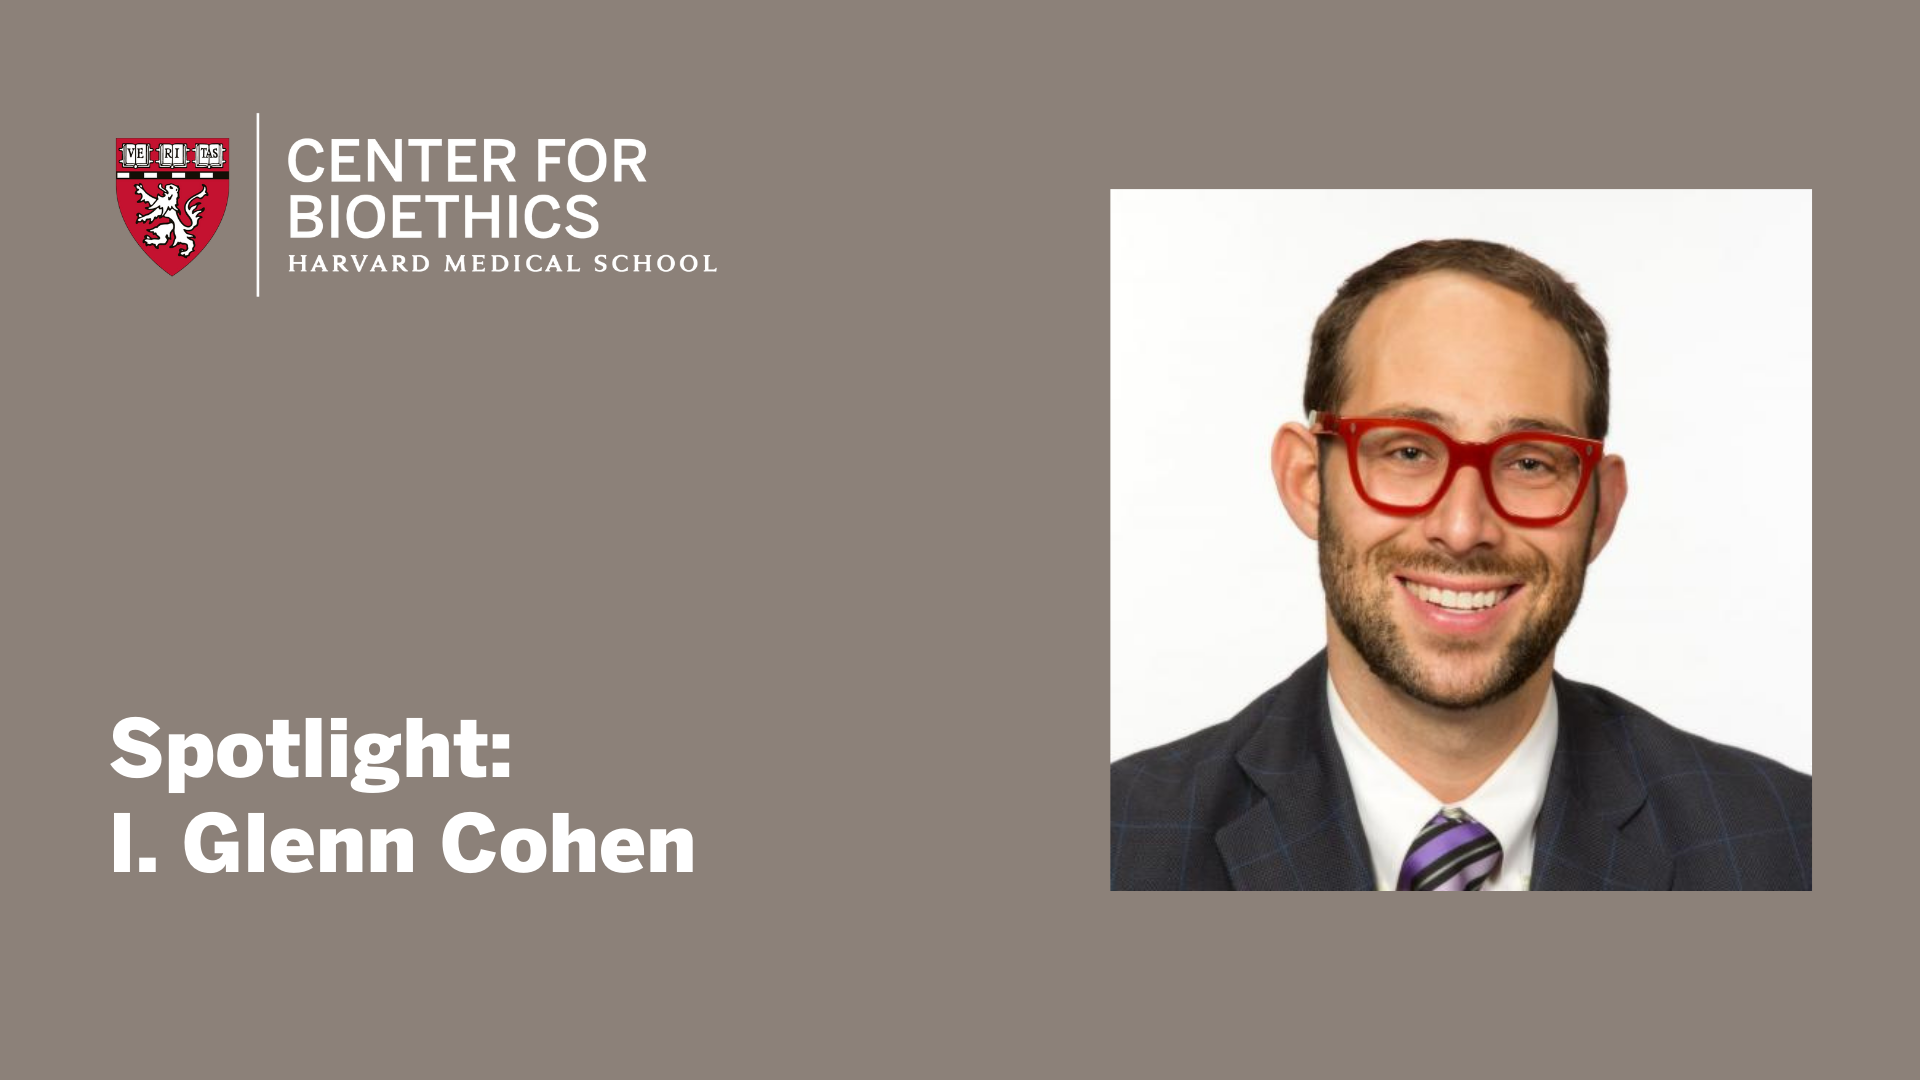 I. Glenn Cohen's headshot on a brown background with Center for Bioethics logo